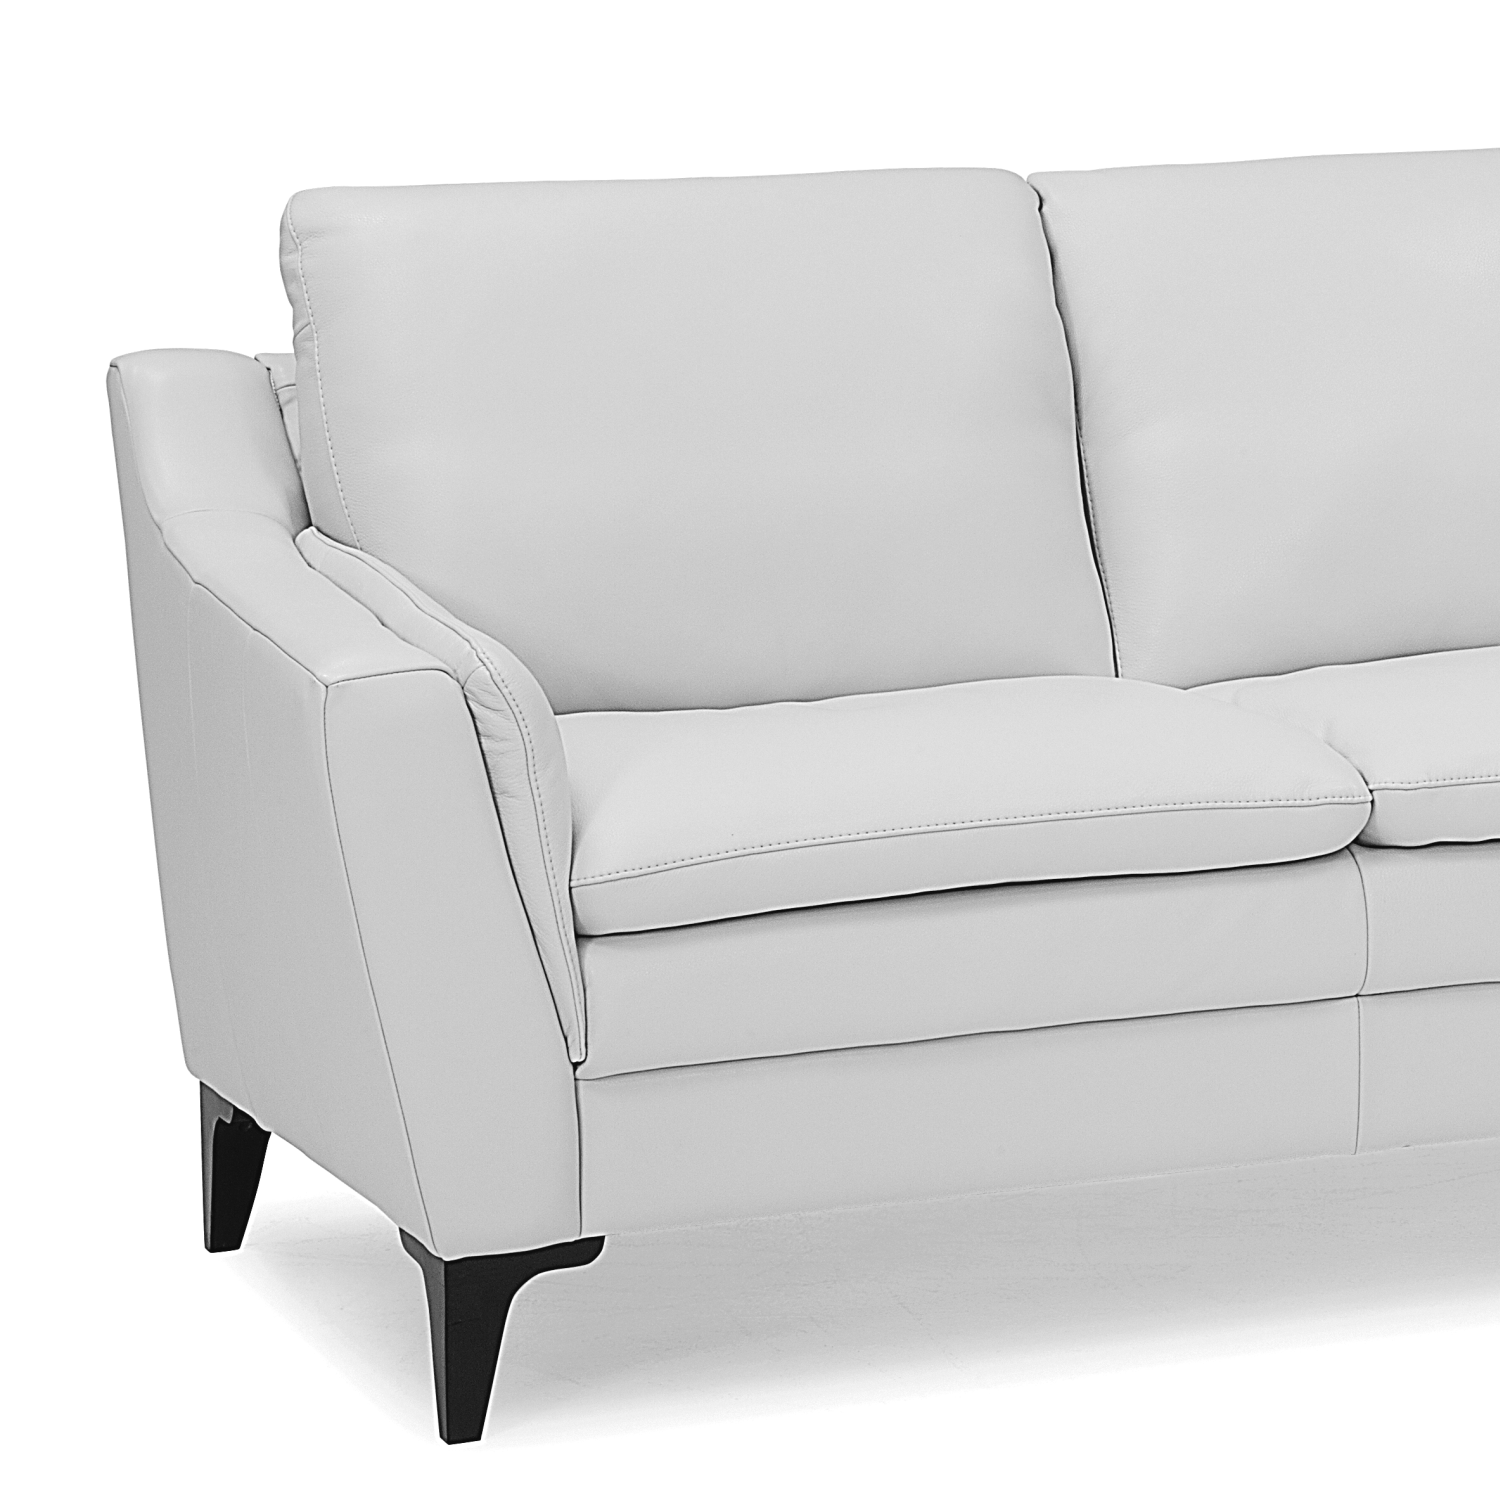 Palliser Balmoral sofa front angled view